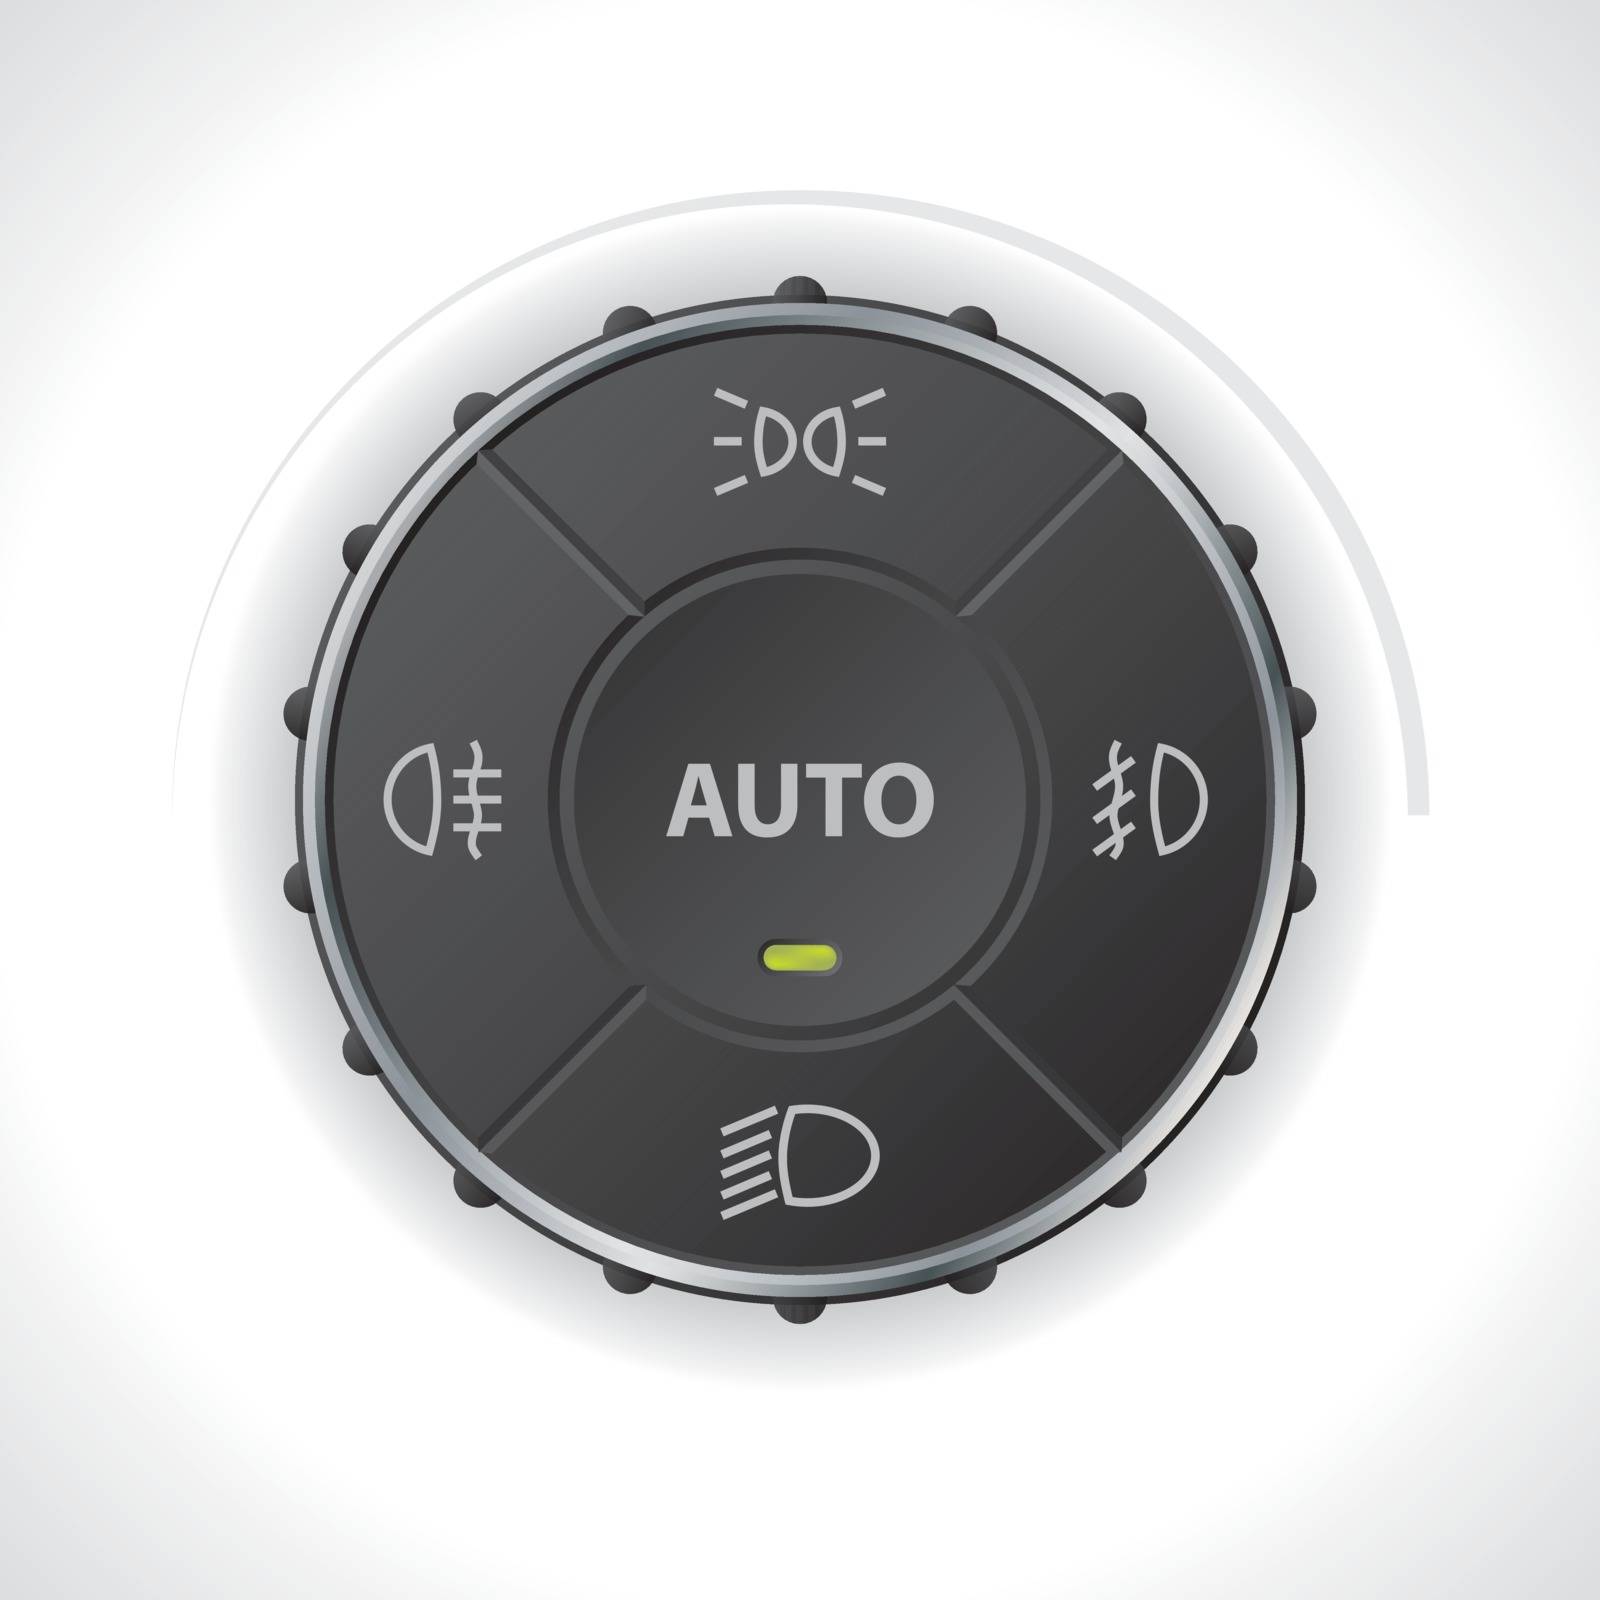 Light control gauge design for cars and automobiles